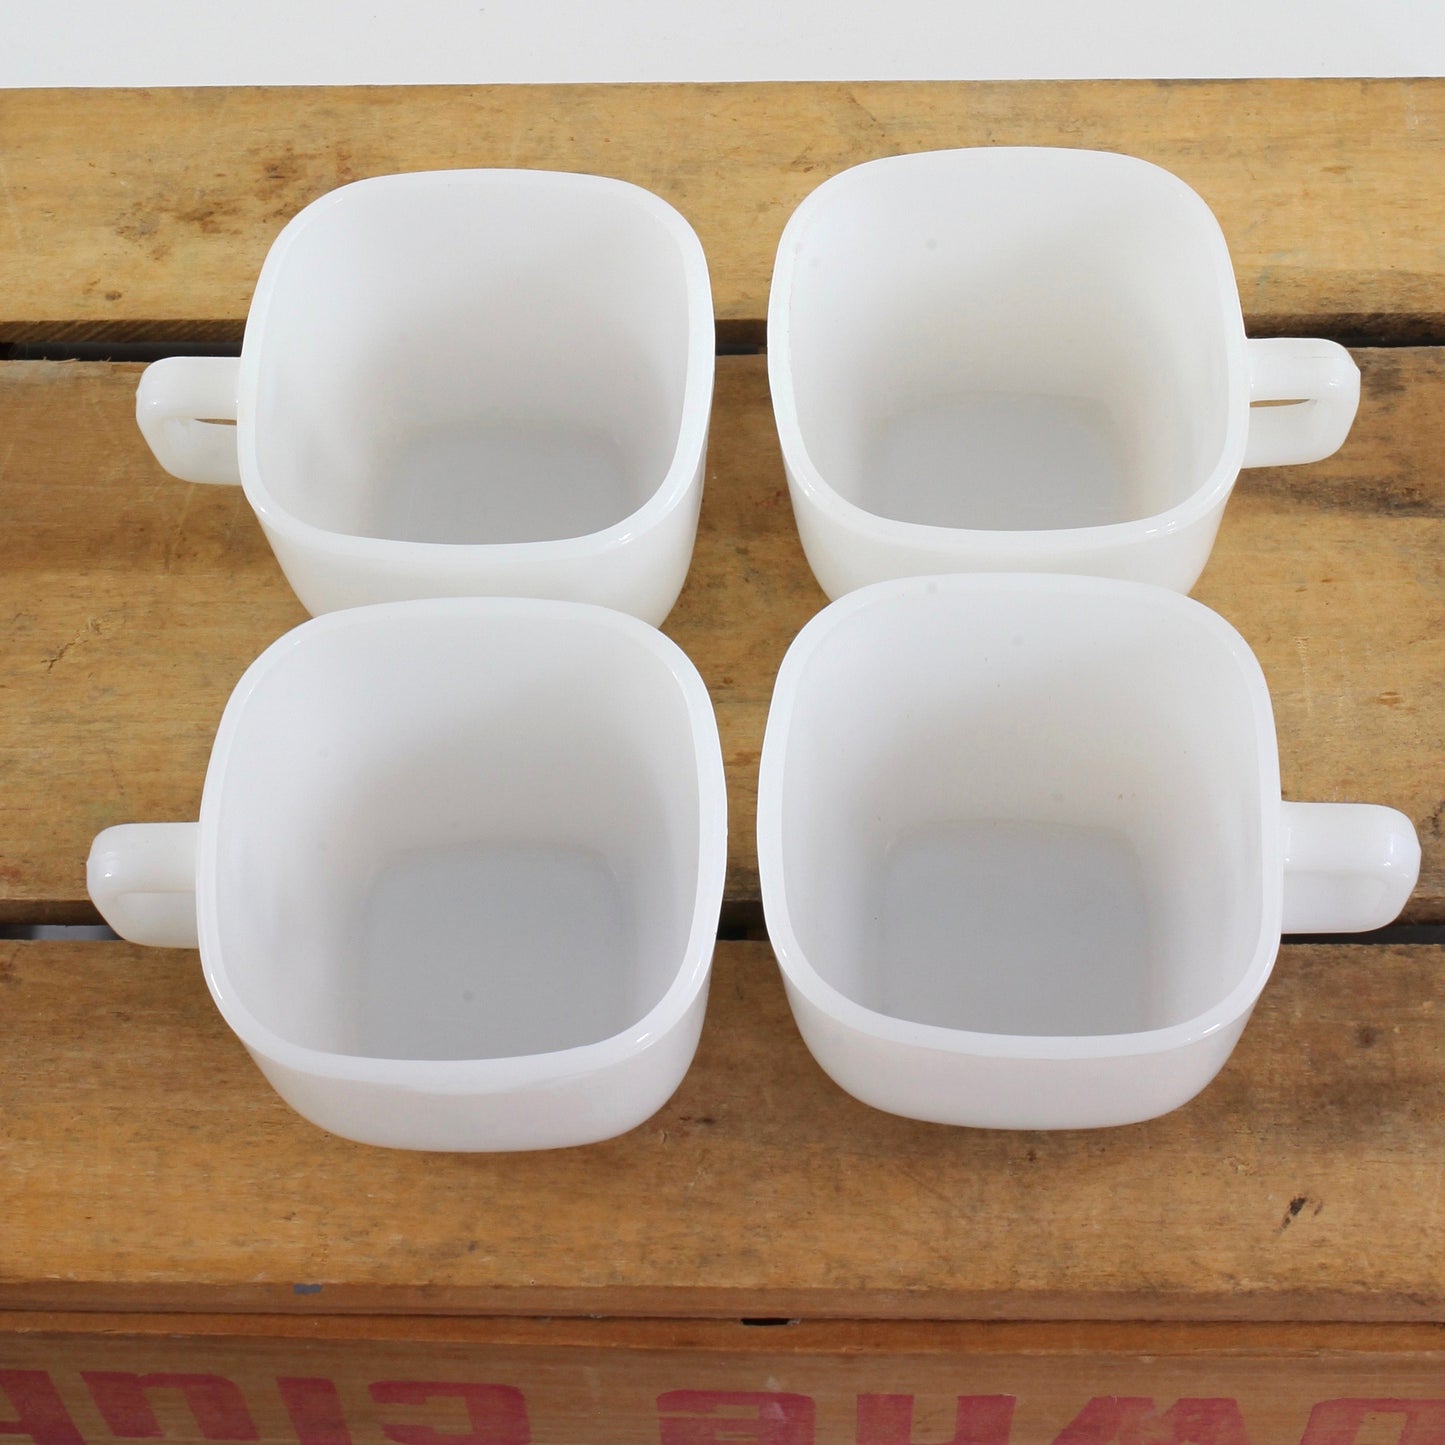 SOLD - Vintage Square White Lipton Milk Glass Mugs by Glasbake